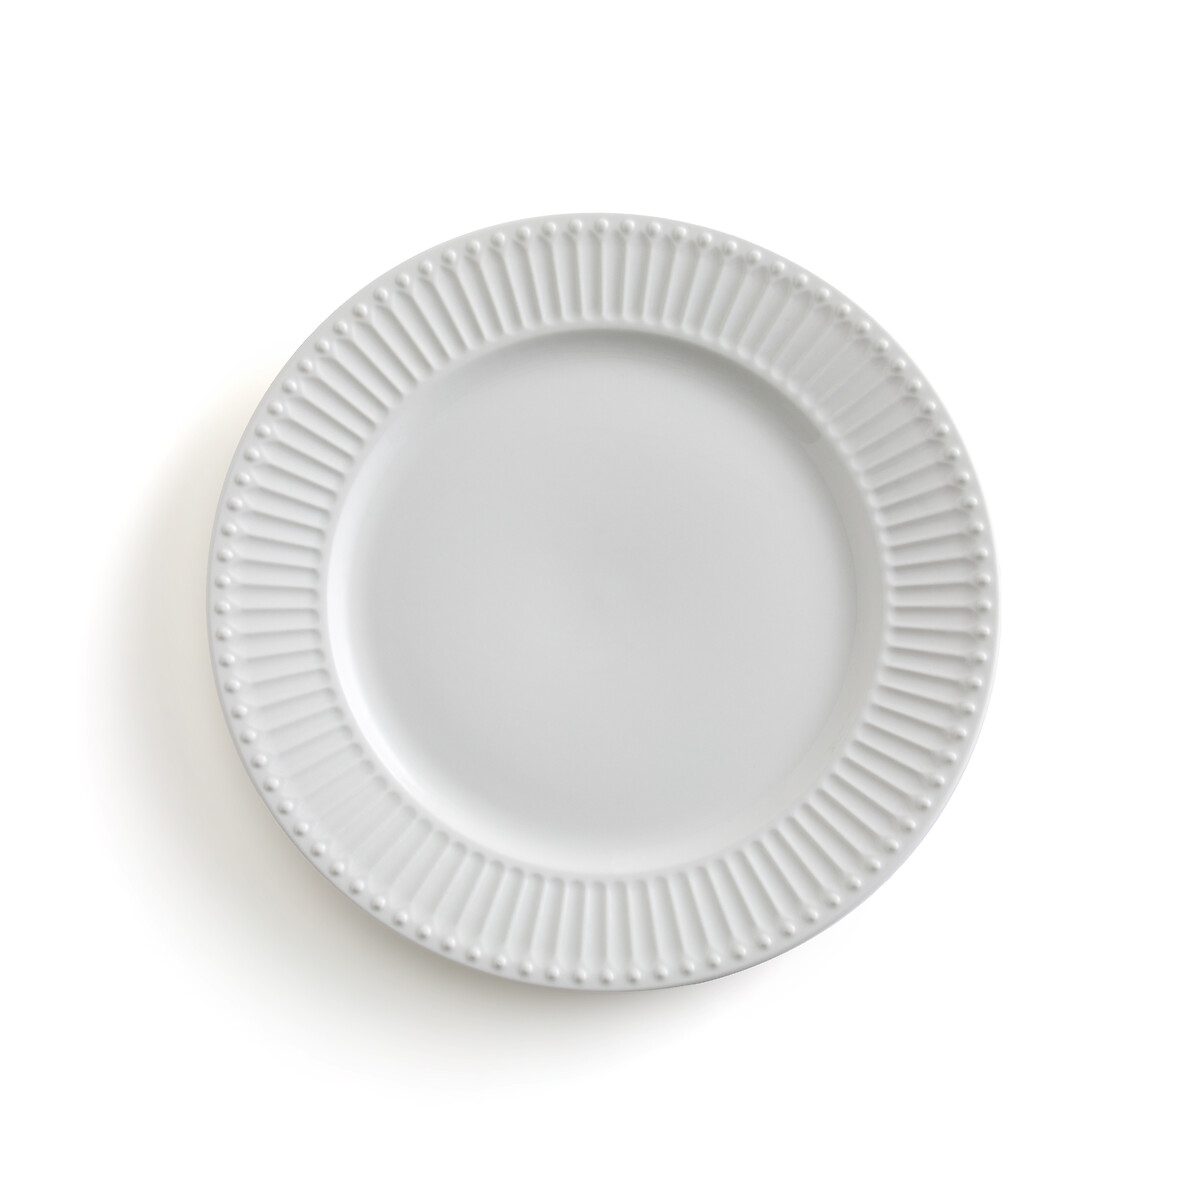 Комплект из 6 плоских тарелок Из фарфора Jewely единый размер белый